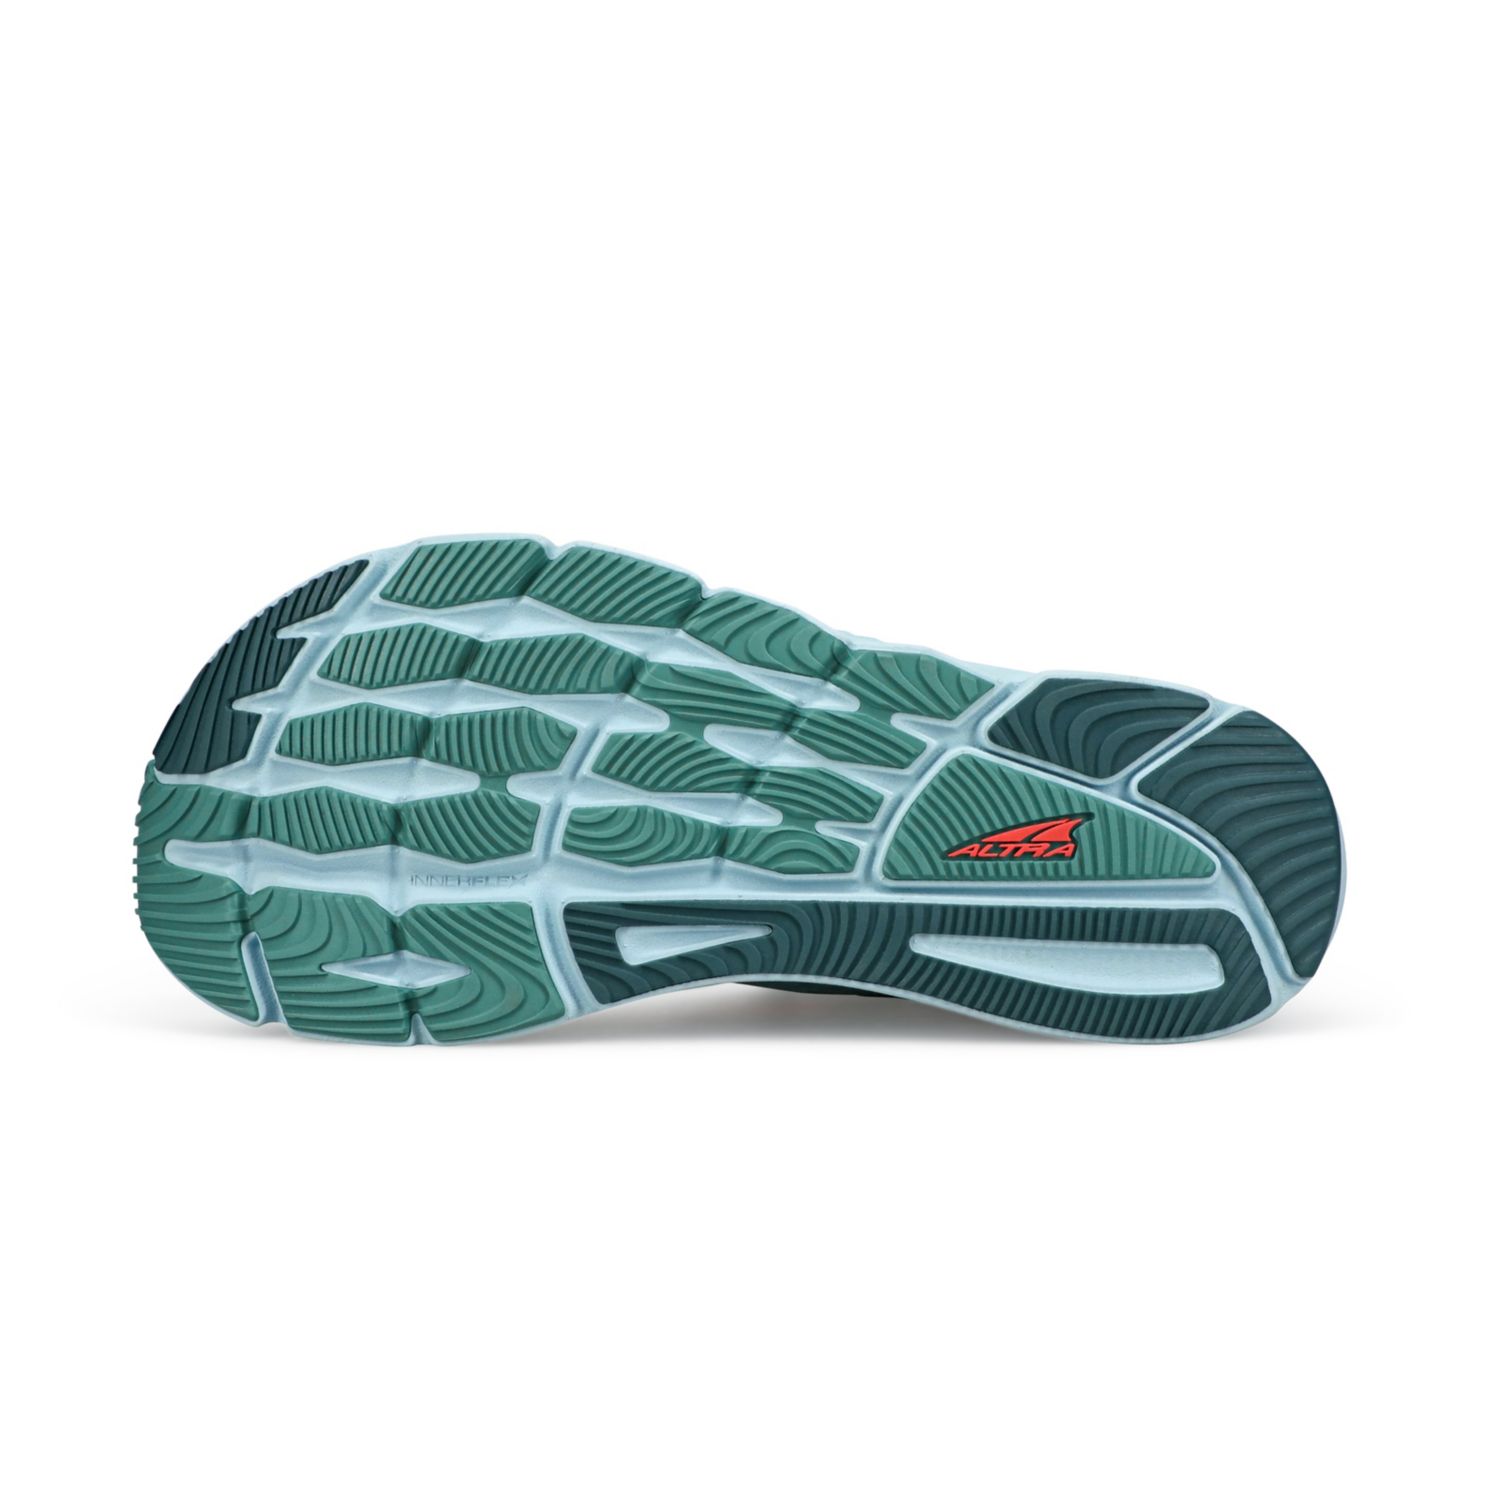 Turquoise Altra Torin 6 Women's Walking Shoes | Ireland-40387619